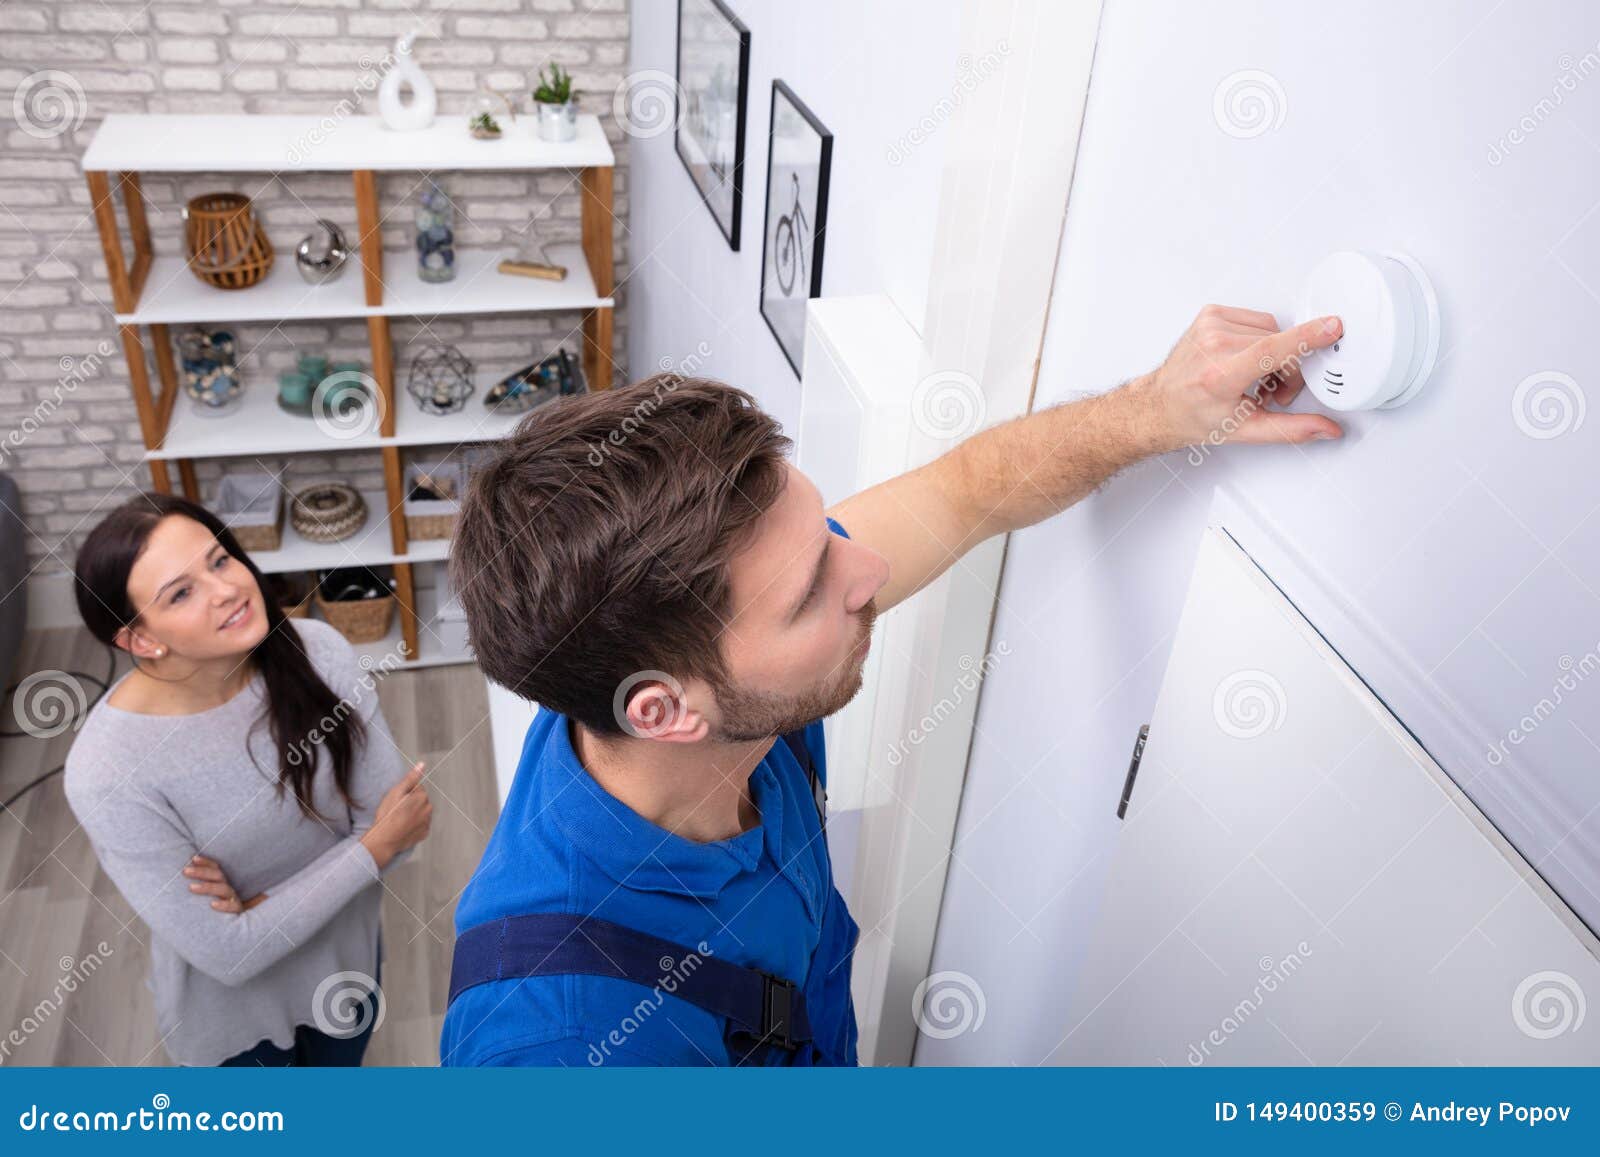 repairman installing smoke detector on wall